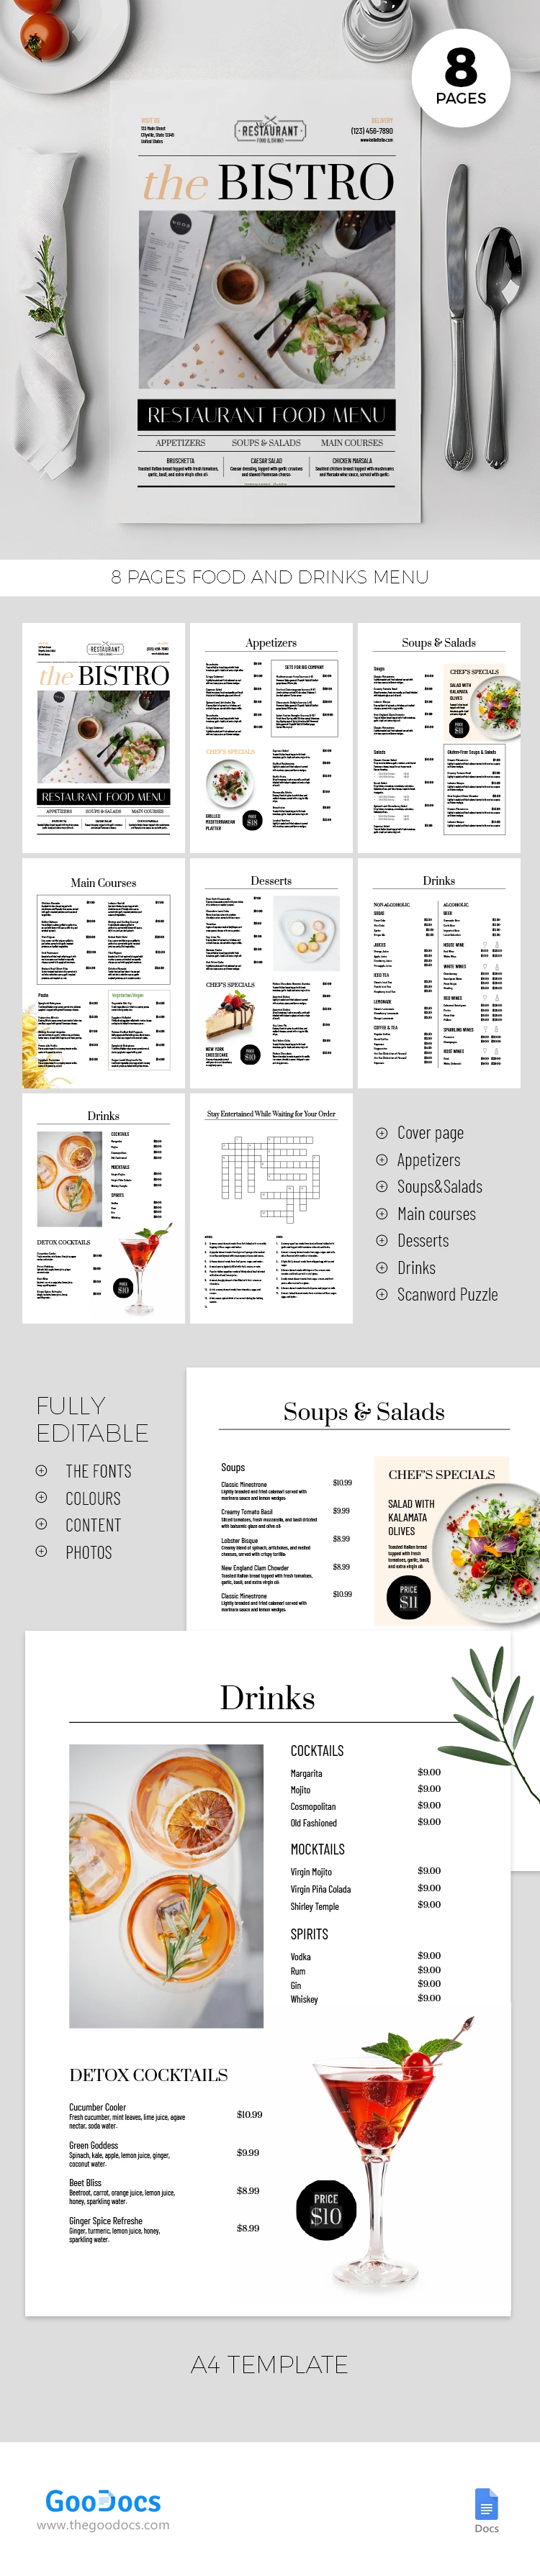 Simple Restaurant Menu - free Google Docs Template - 10068672